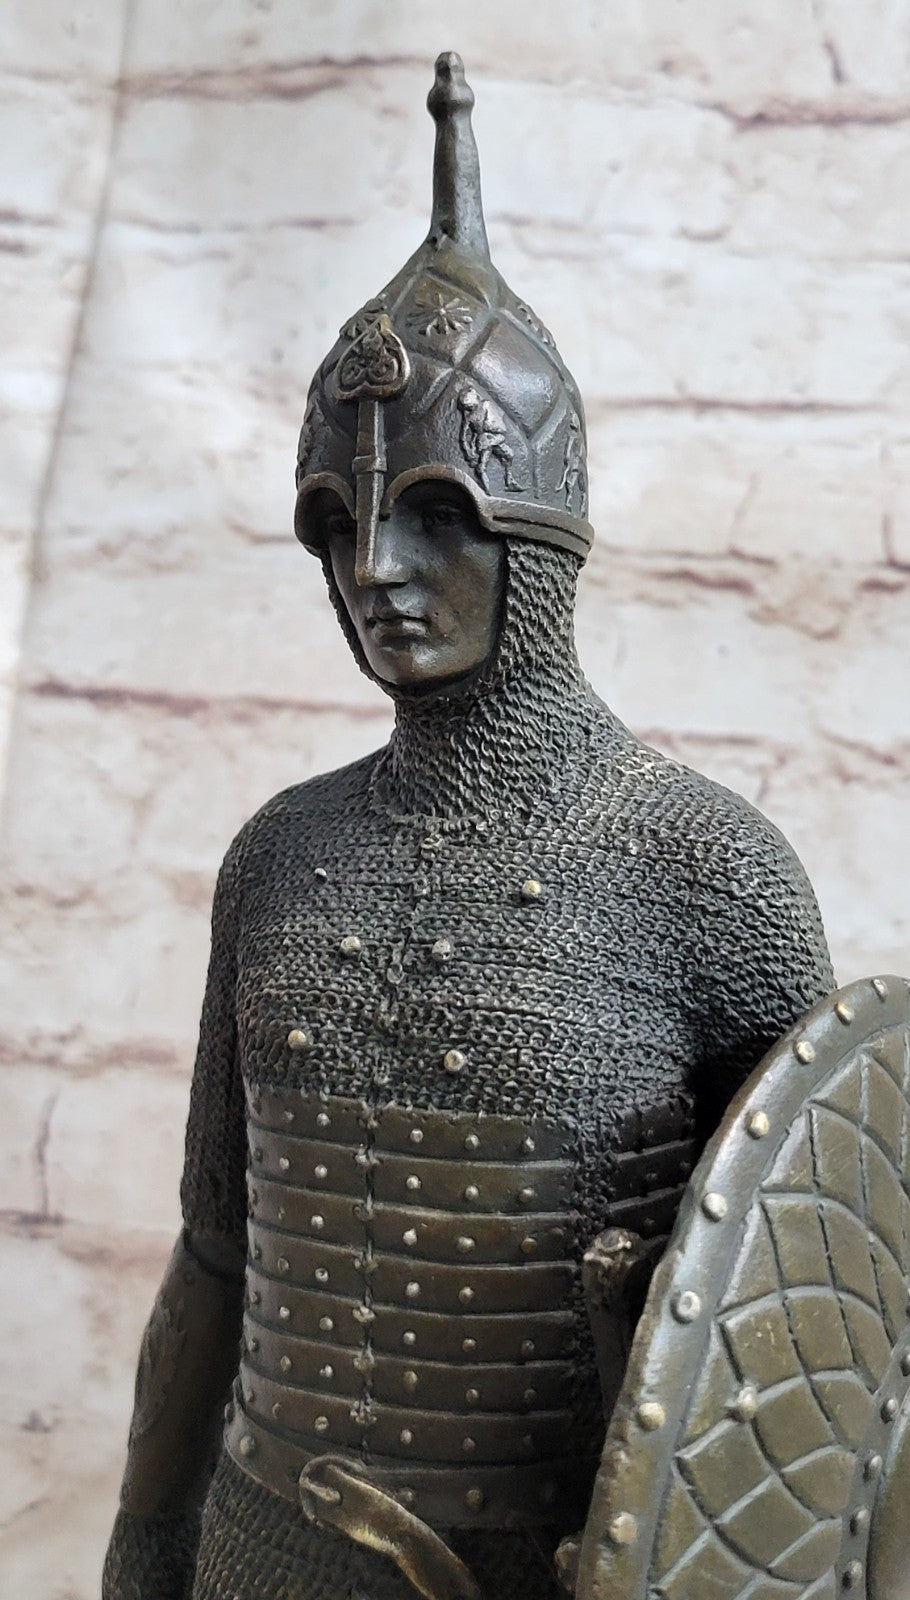 15" Tall Medieval Crusader Knight Templar Signed Hot Cast Bronze Statue Sculpture